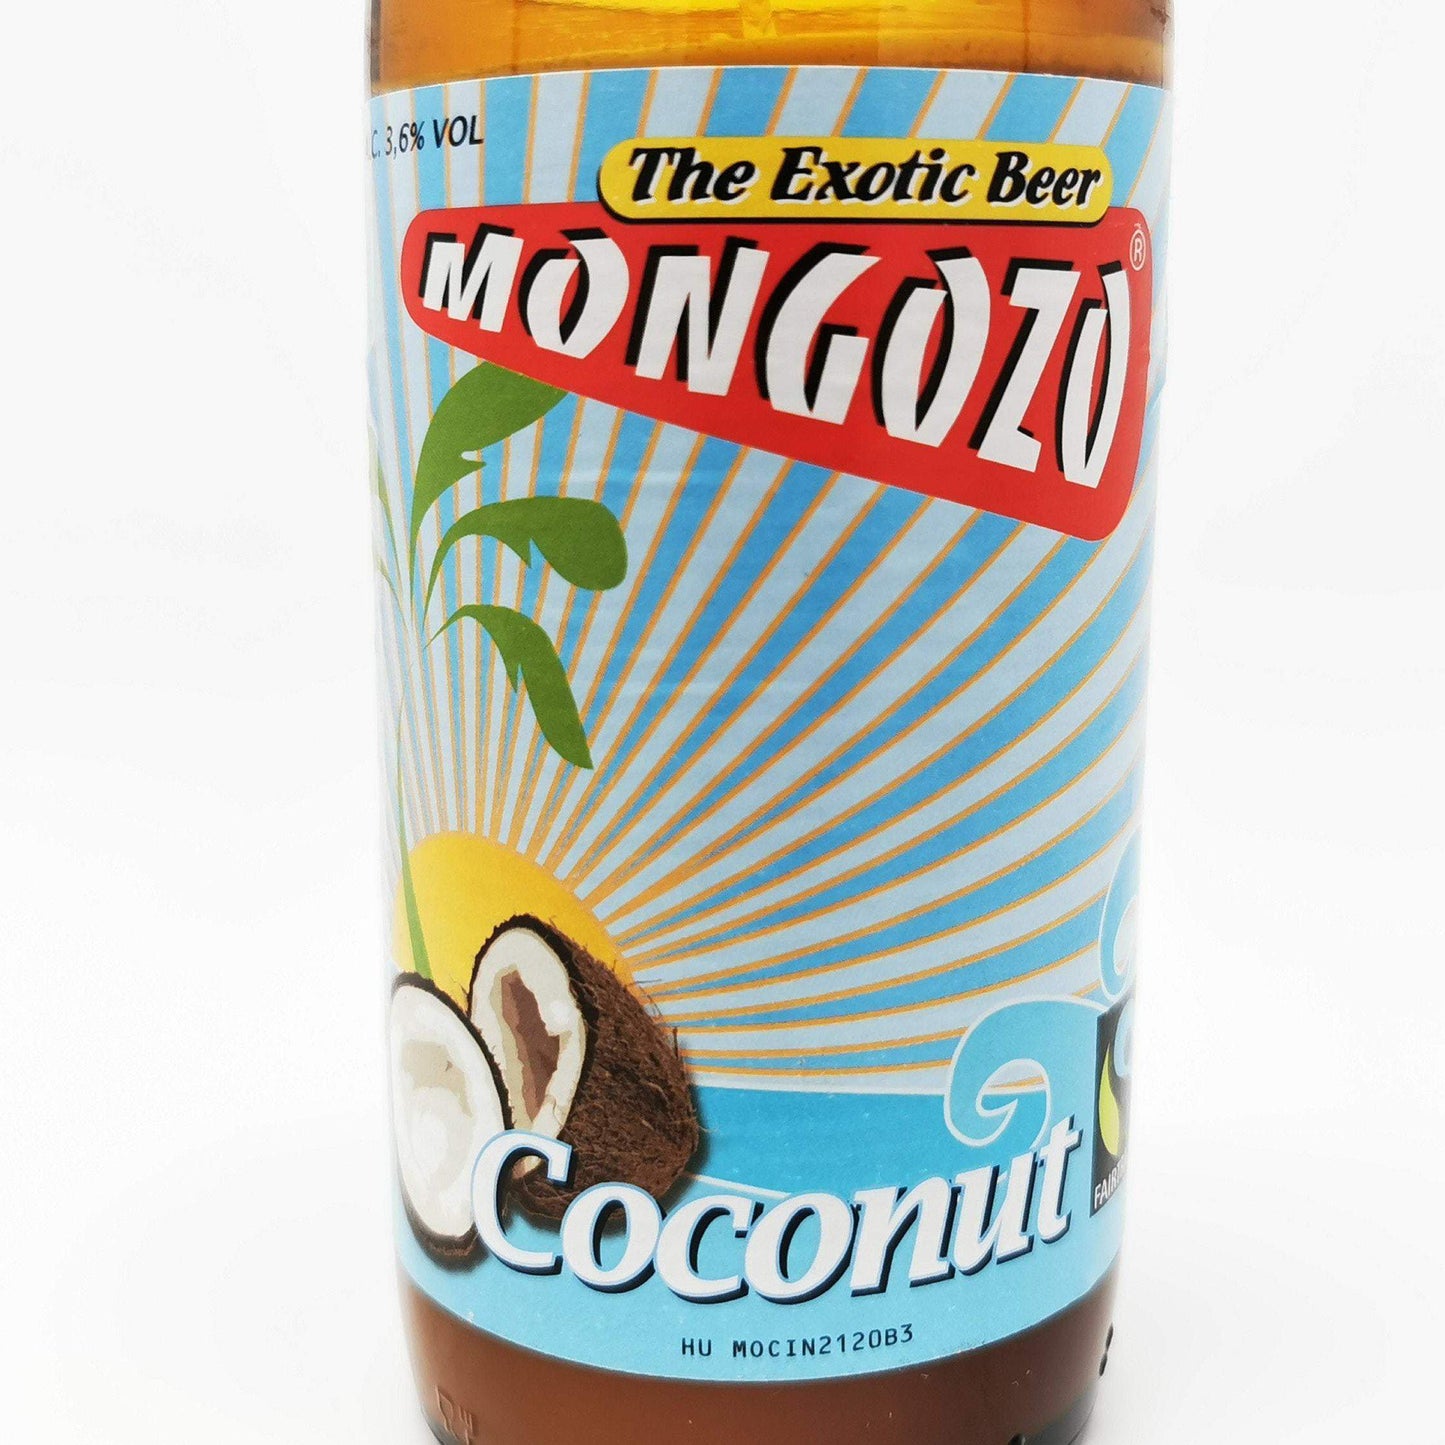 Mongozo Coconut Beer Bottle Candle Beer & Ale Bottle Candles Adhock Homeware